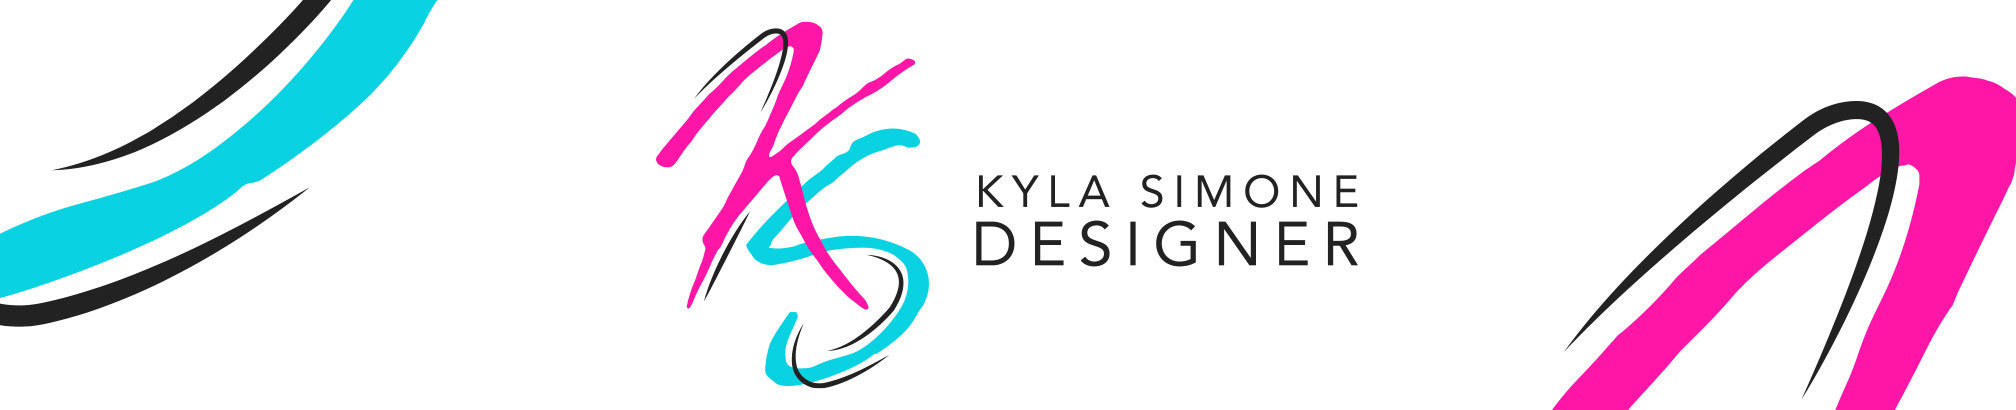 Kyla Simone's profile banner